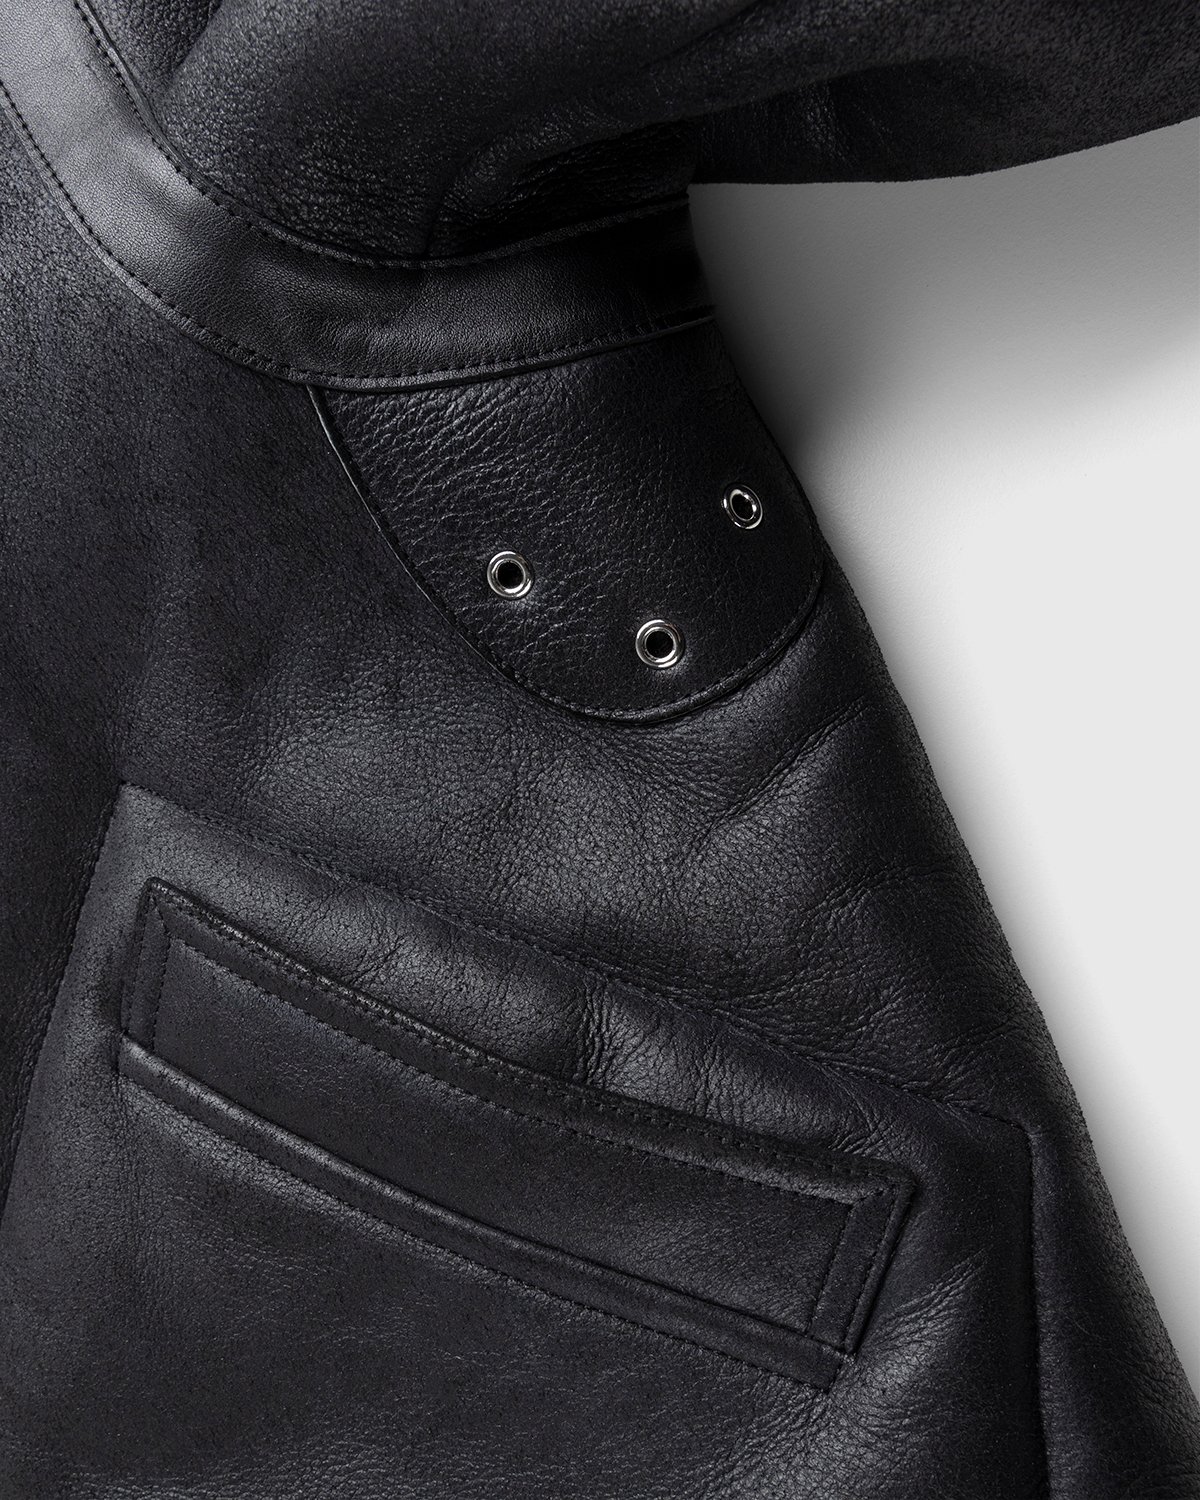 Acne Studios - Shearling Aviator Jacket Black - Clothing - Black - Image 6